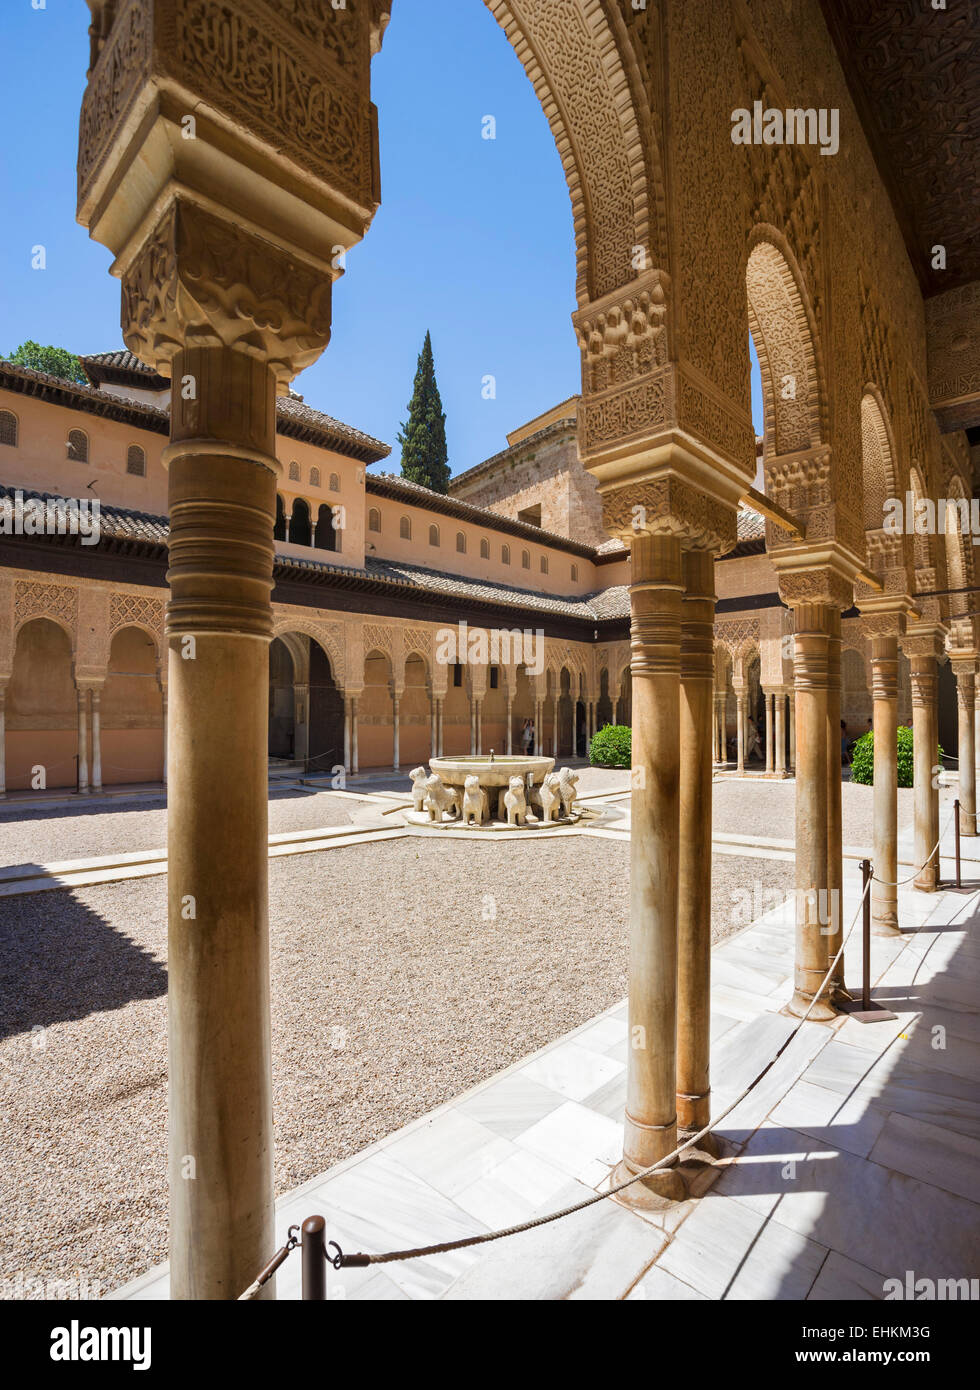 Grenade, l'Alhambra. Patio de los Leones (Cour des Lions ), Palacios Nazaries, Alhambra, Granada, Andalousie, Espagne Banque D'Images